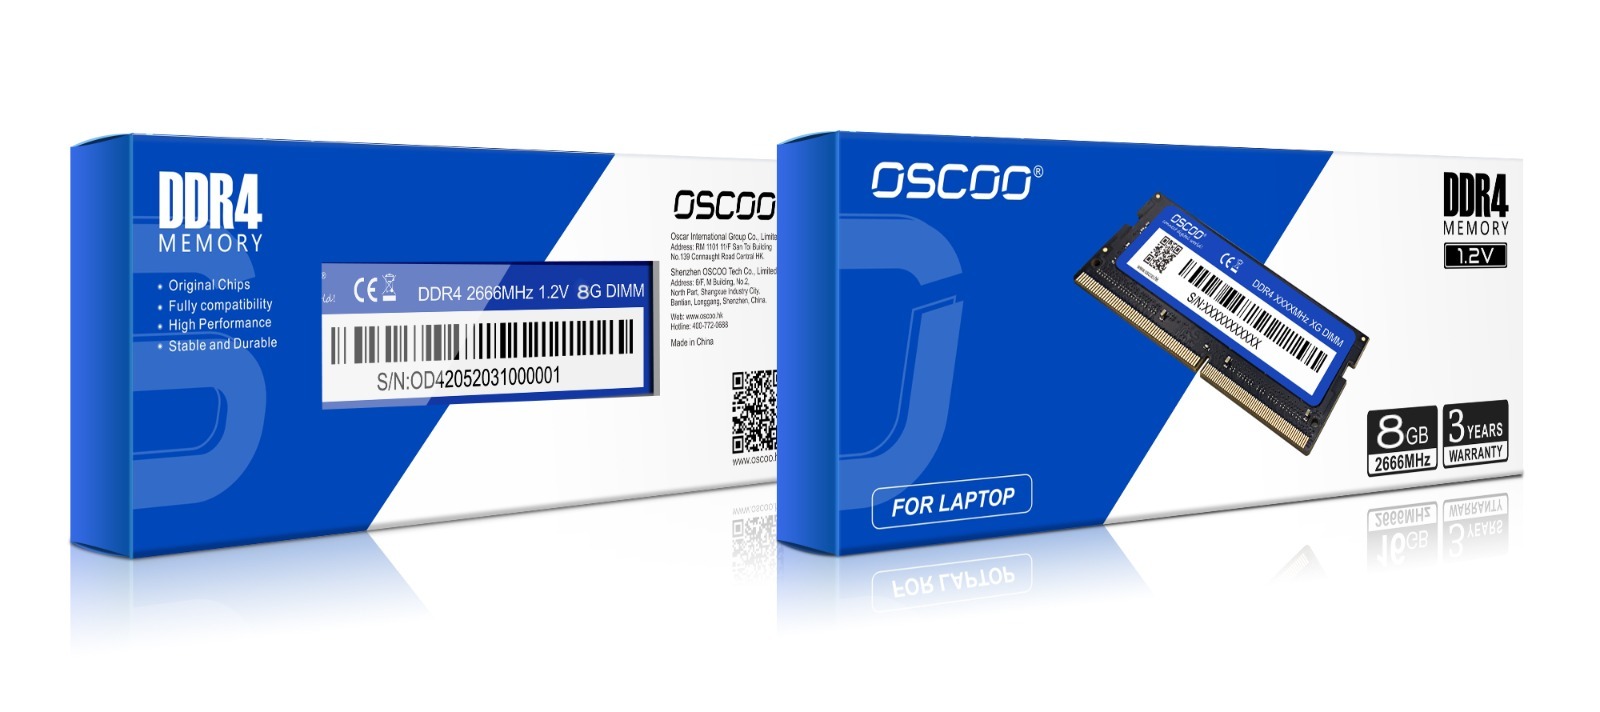 OSCOO DDR4 laptop 16GB 3200MHz